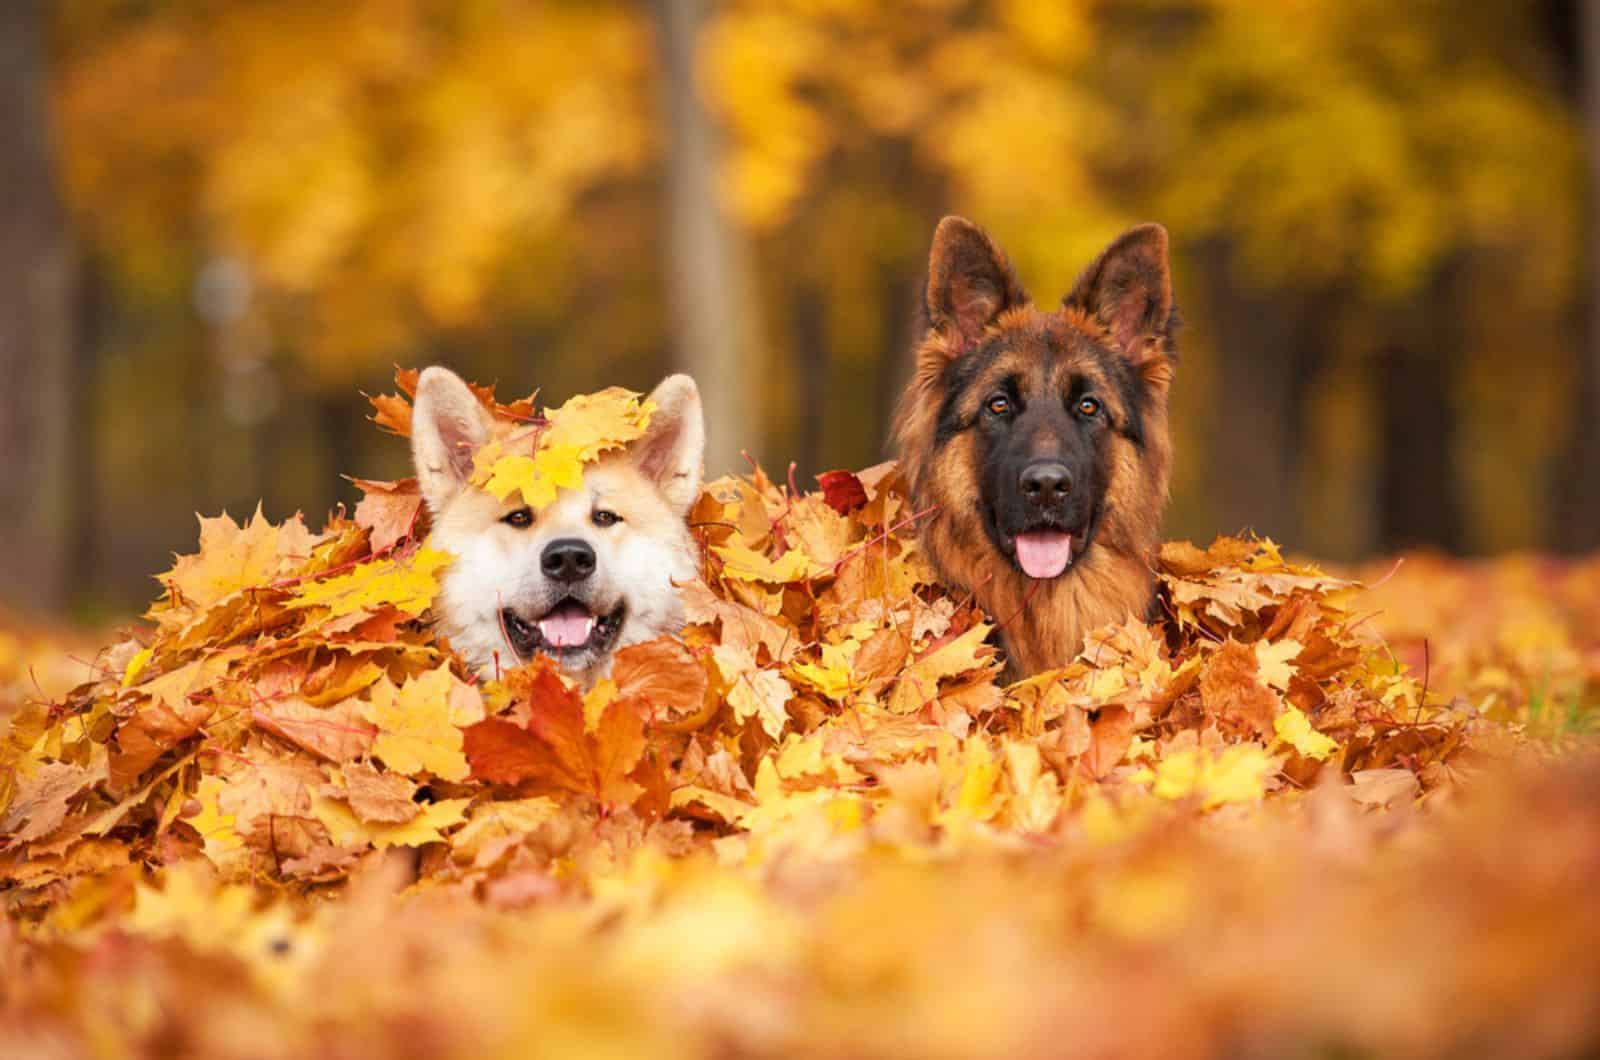 german shepherd and akita playing in the fallen leaves